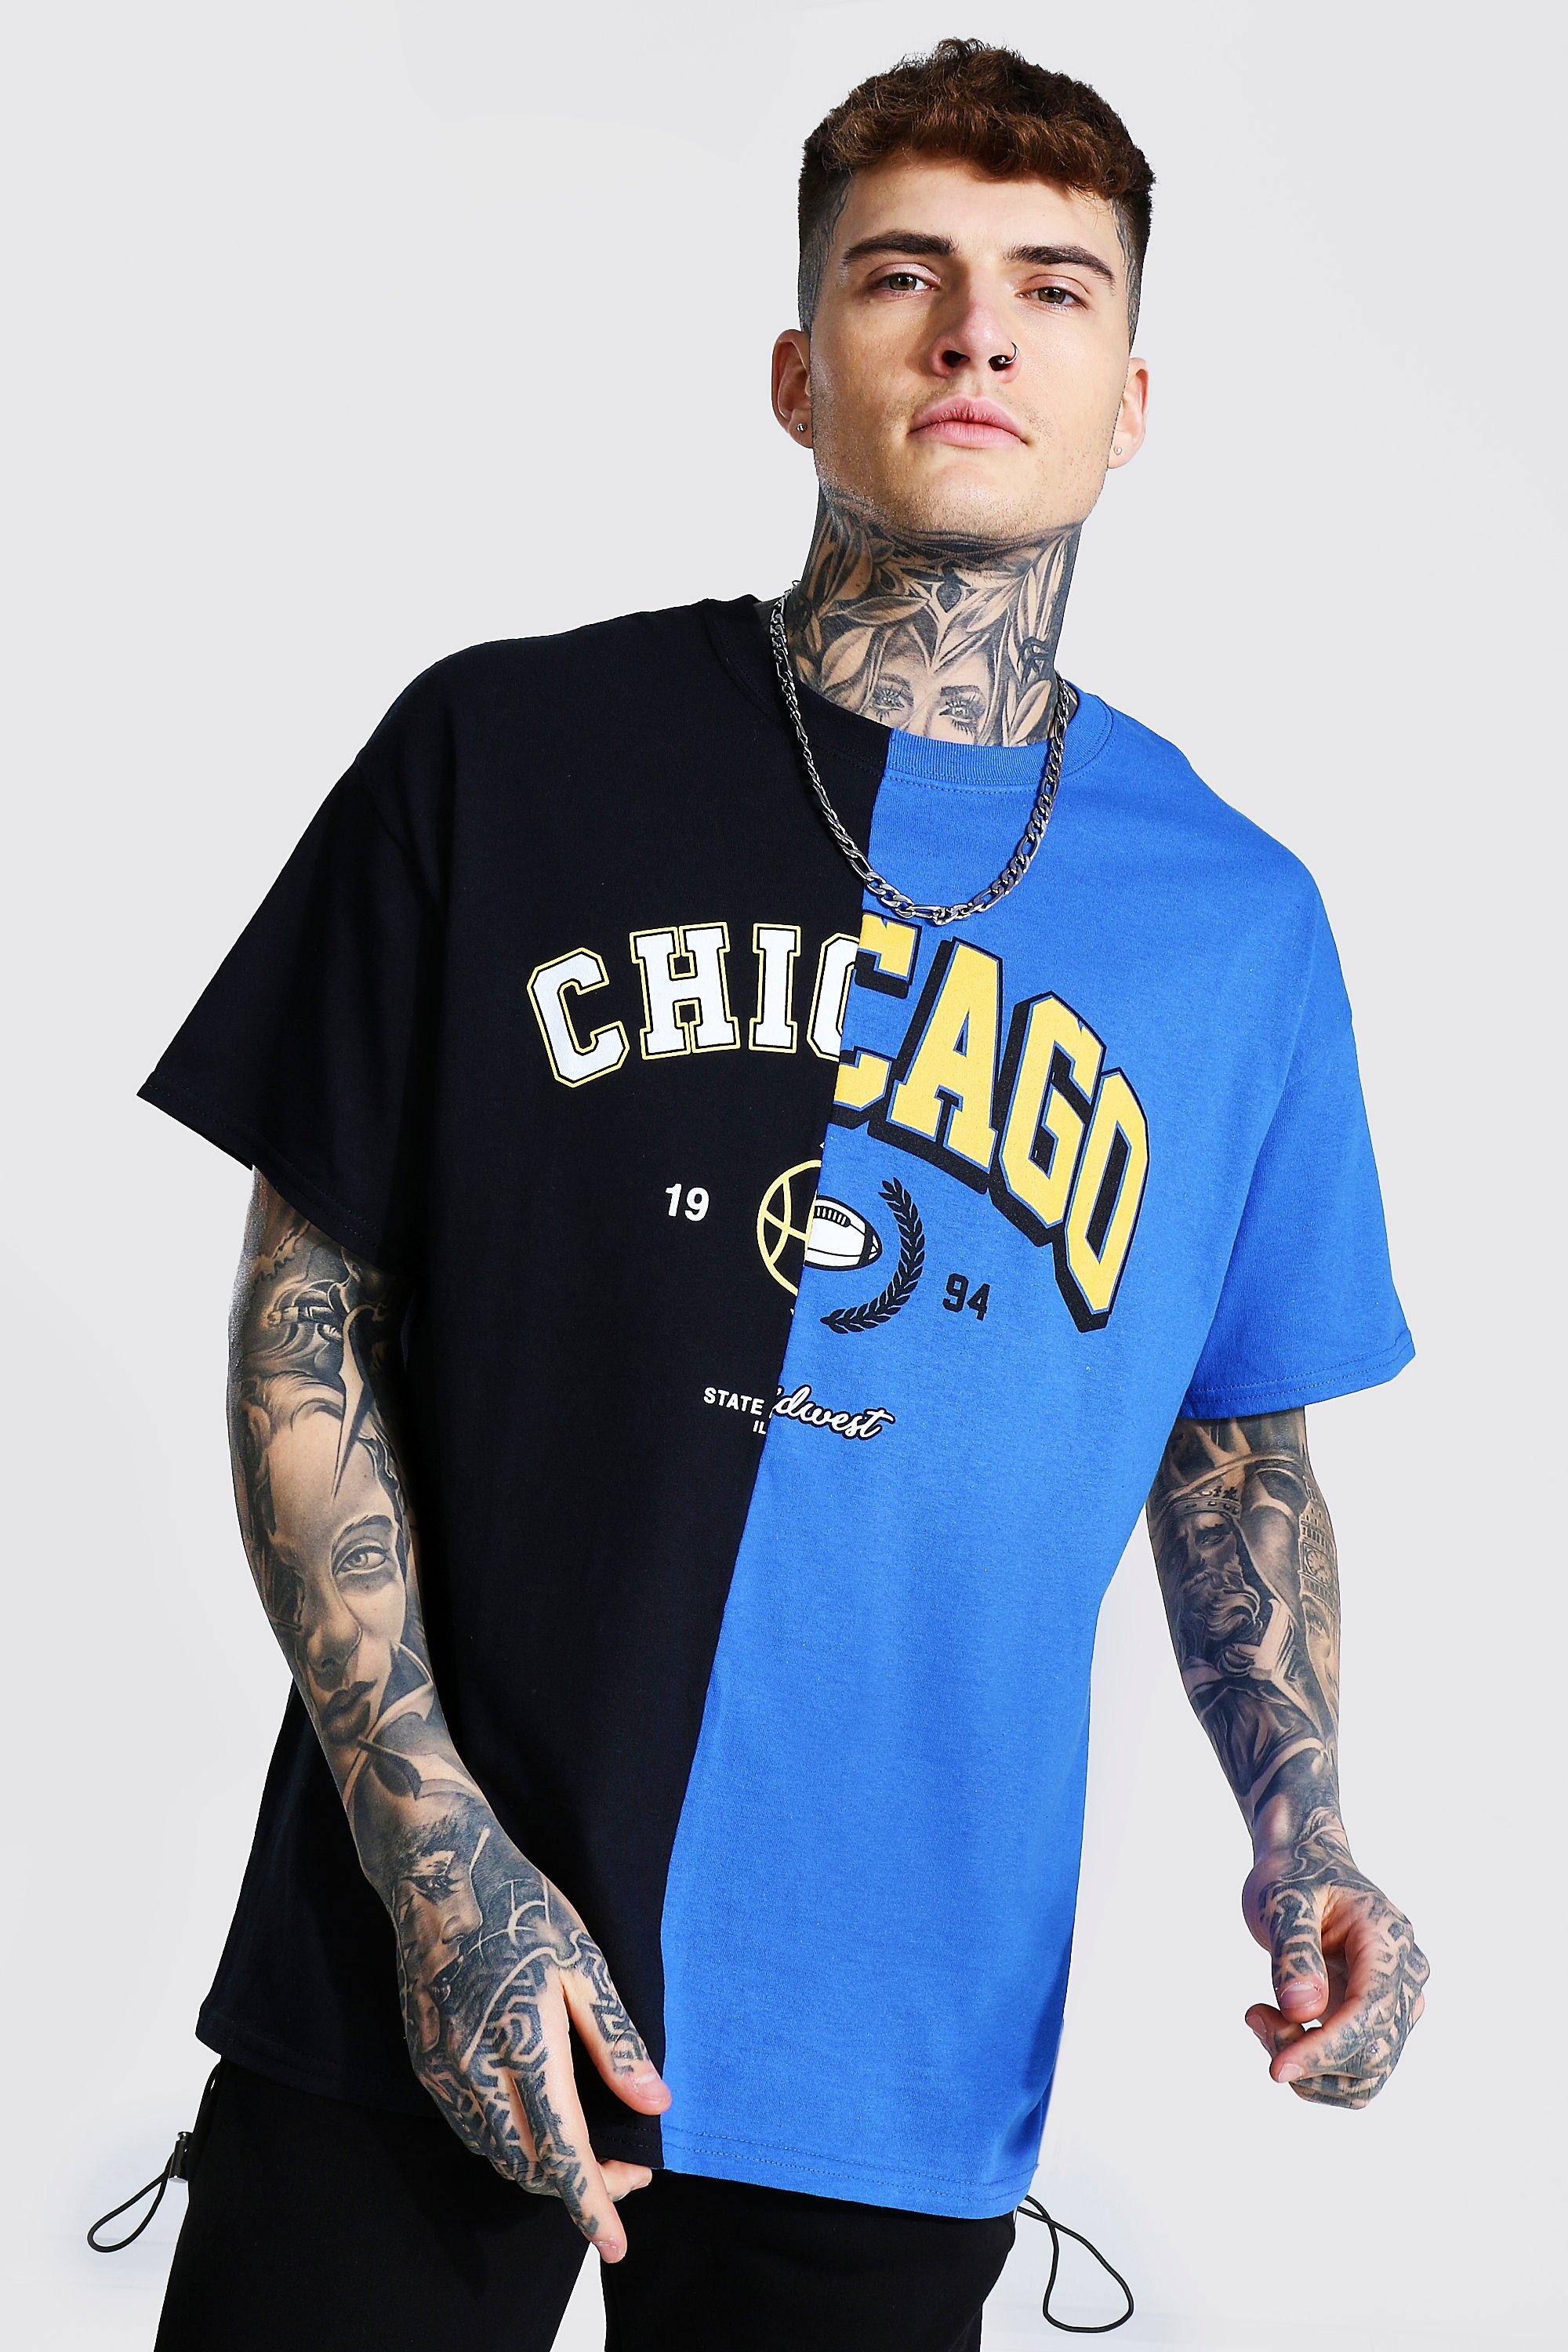 oversized chicago t shirt